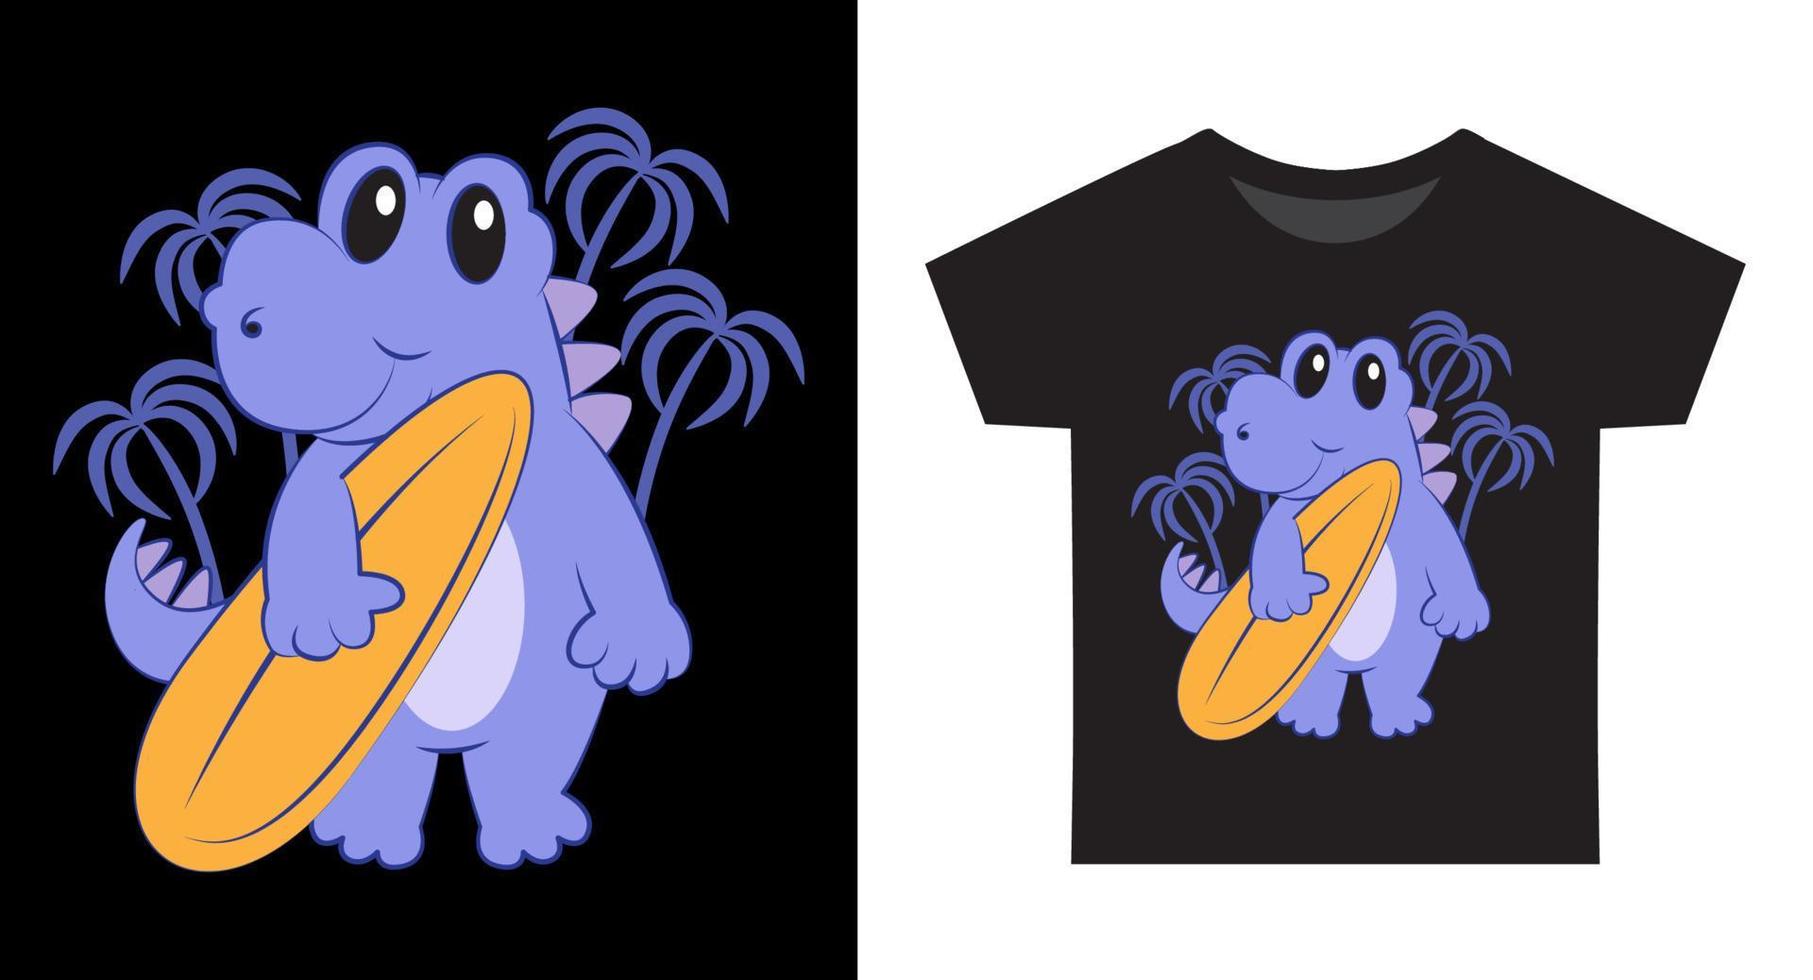 süß wenig Dino mit Surfbrett Karikatur Illustration zum Kinder t Hemd Design vektor